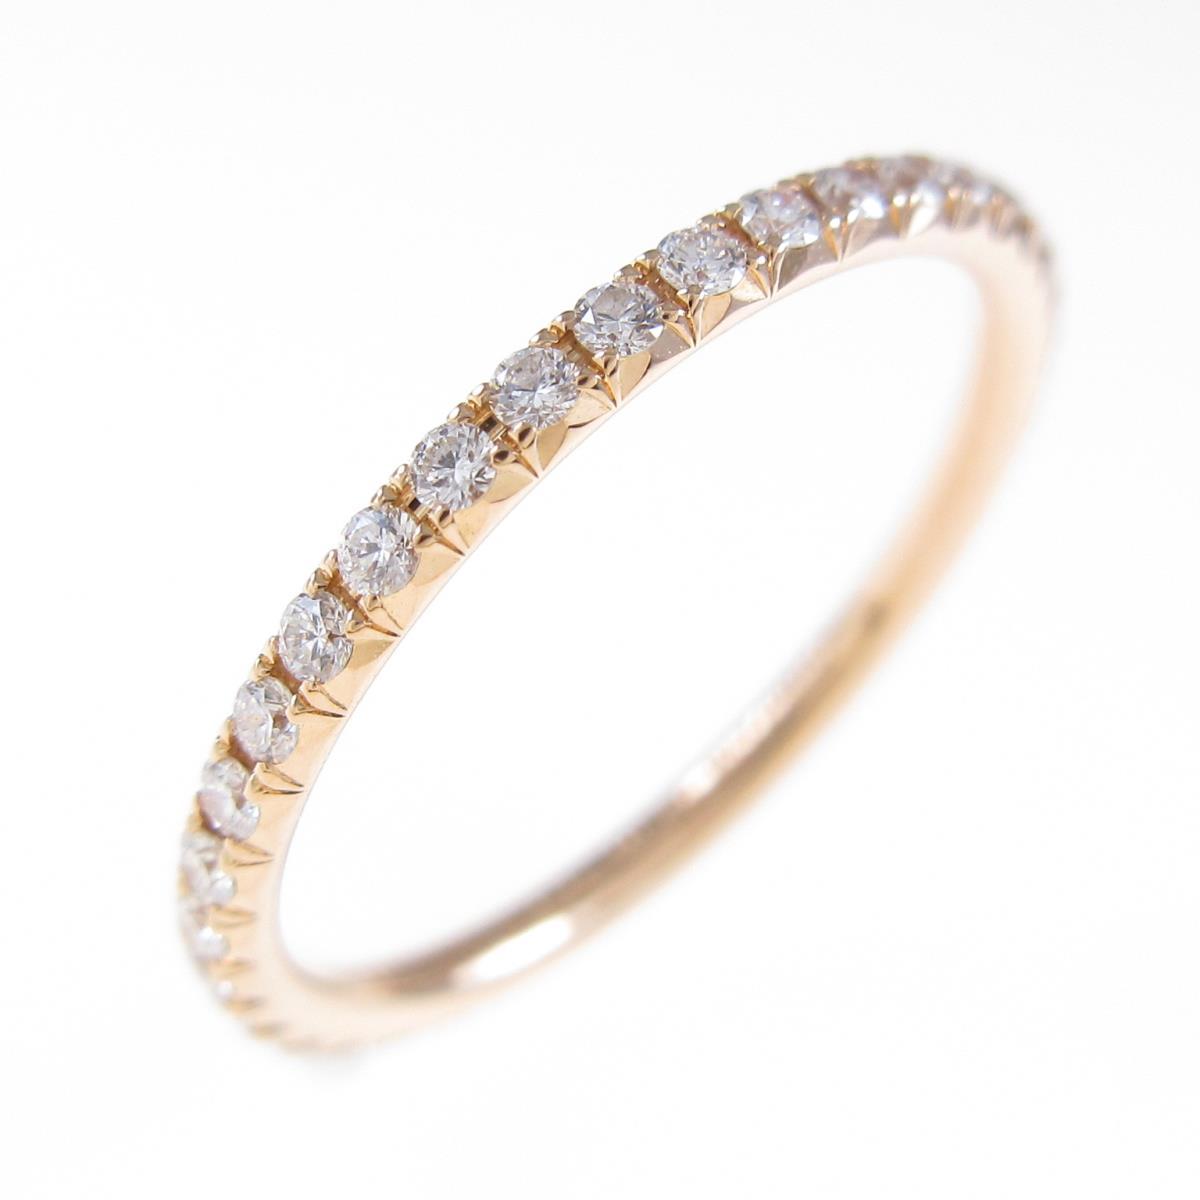 Authentic Tiffany Metro ring #246-000-280-5726 | eBay